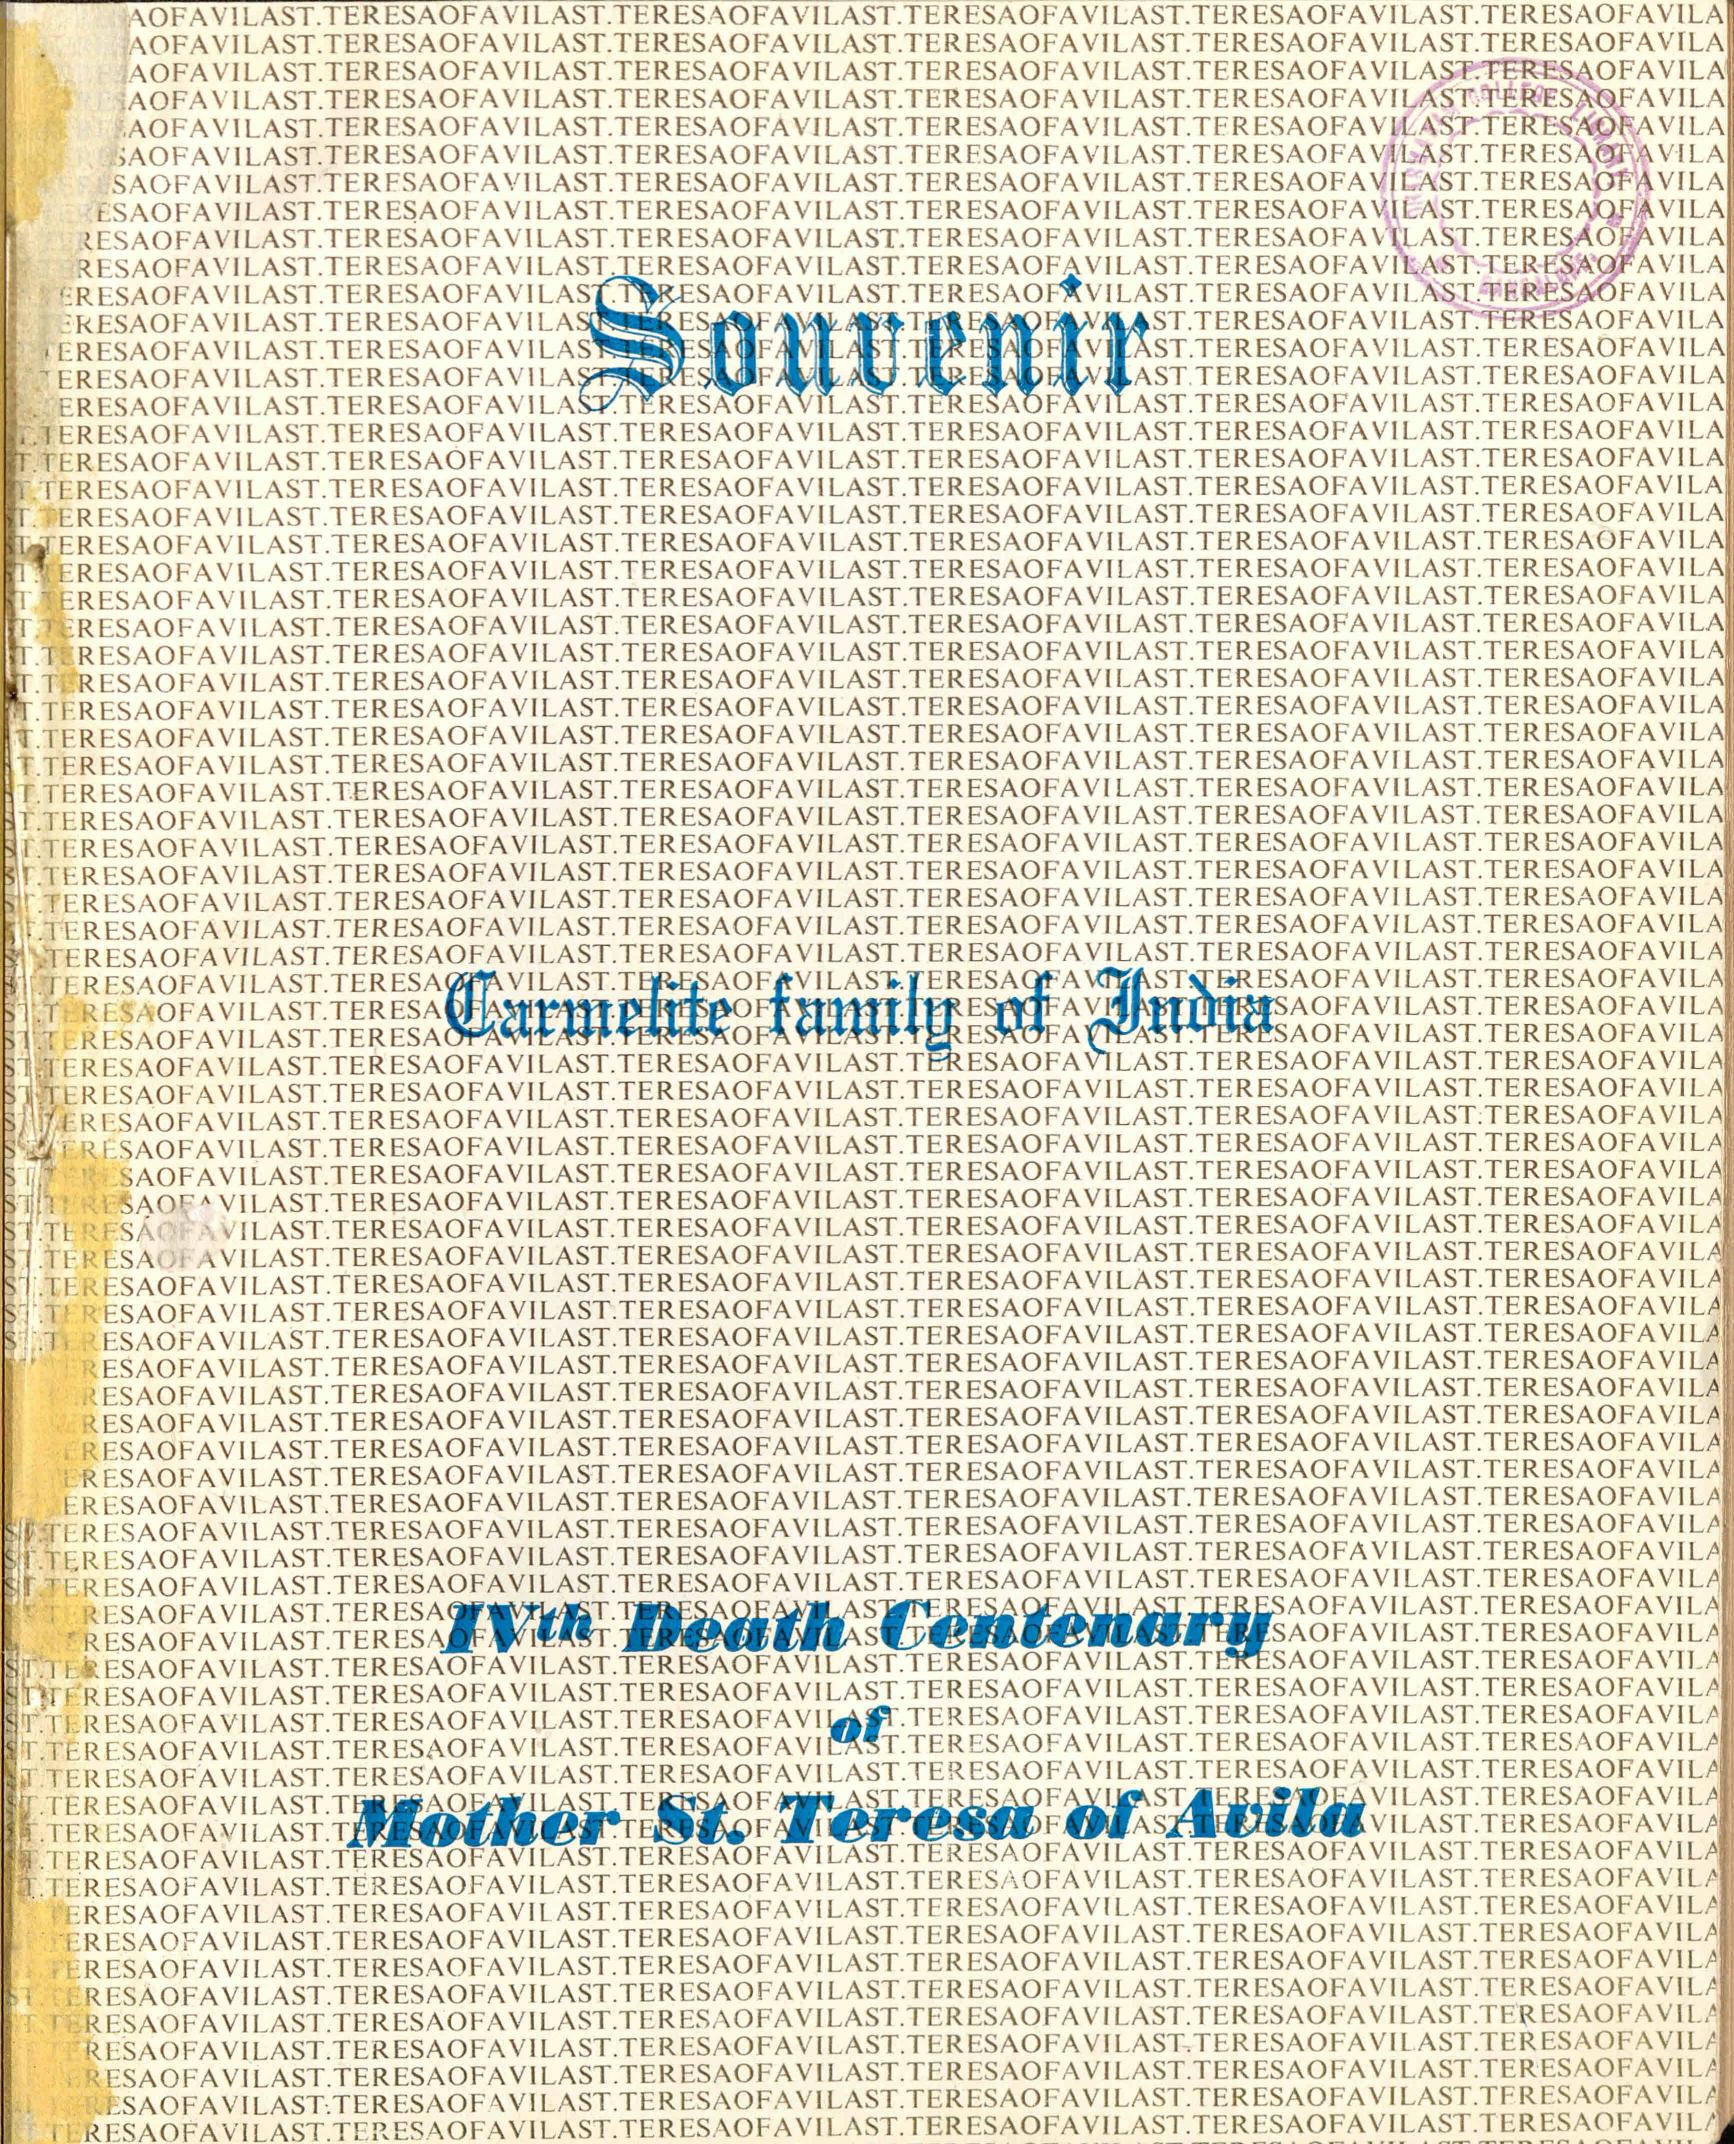  1982 - Carmelite Family of India - Souvenir 